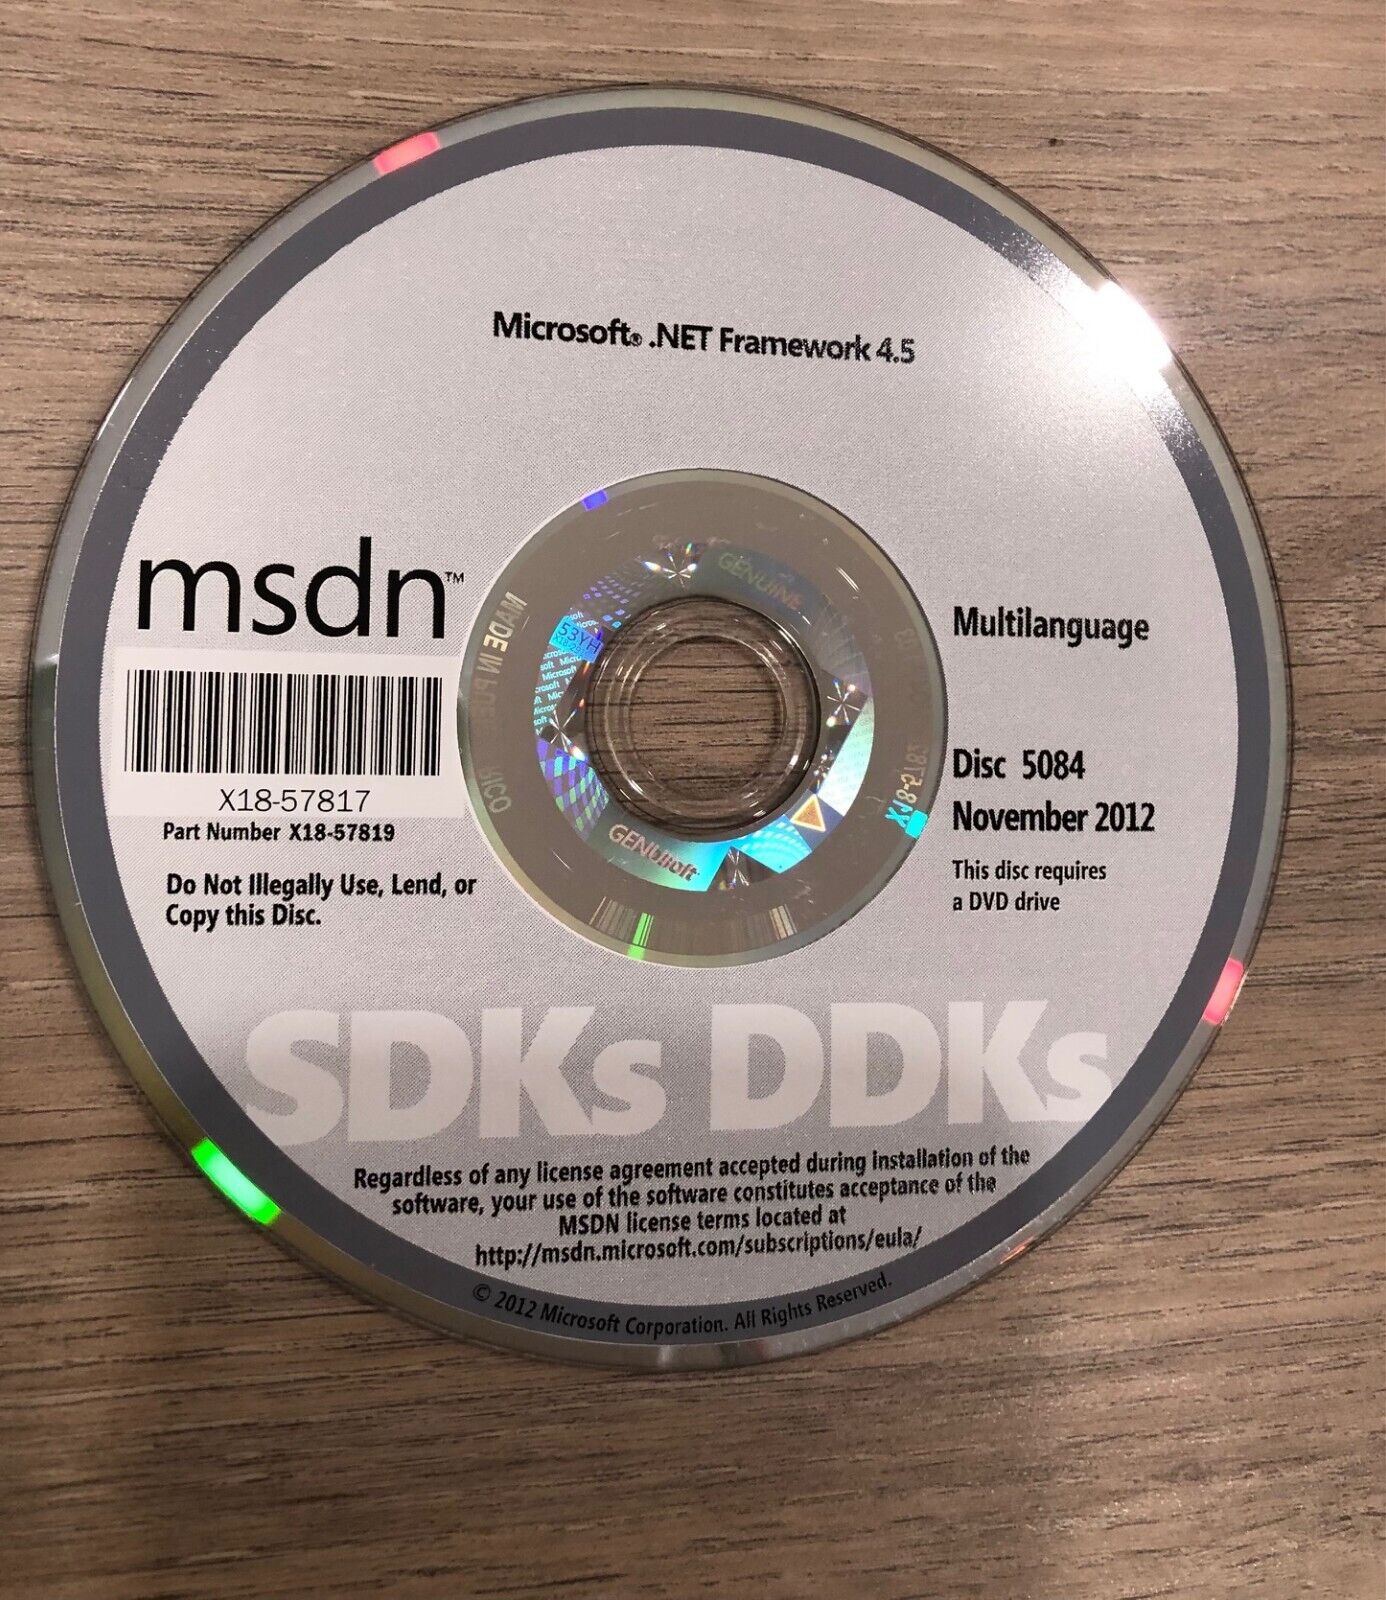 Microsoft Windows .NET Framework 4.5 SDK DDK MSDN CD - Nov 2012 disc 5084